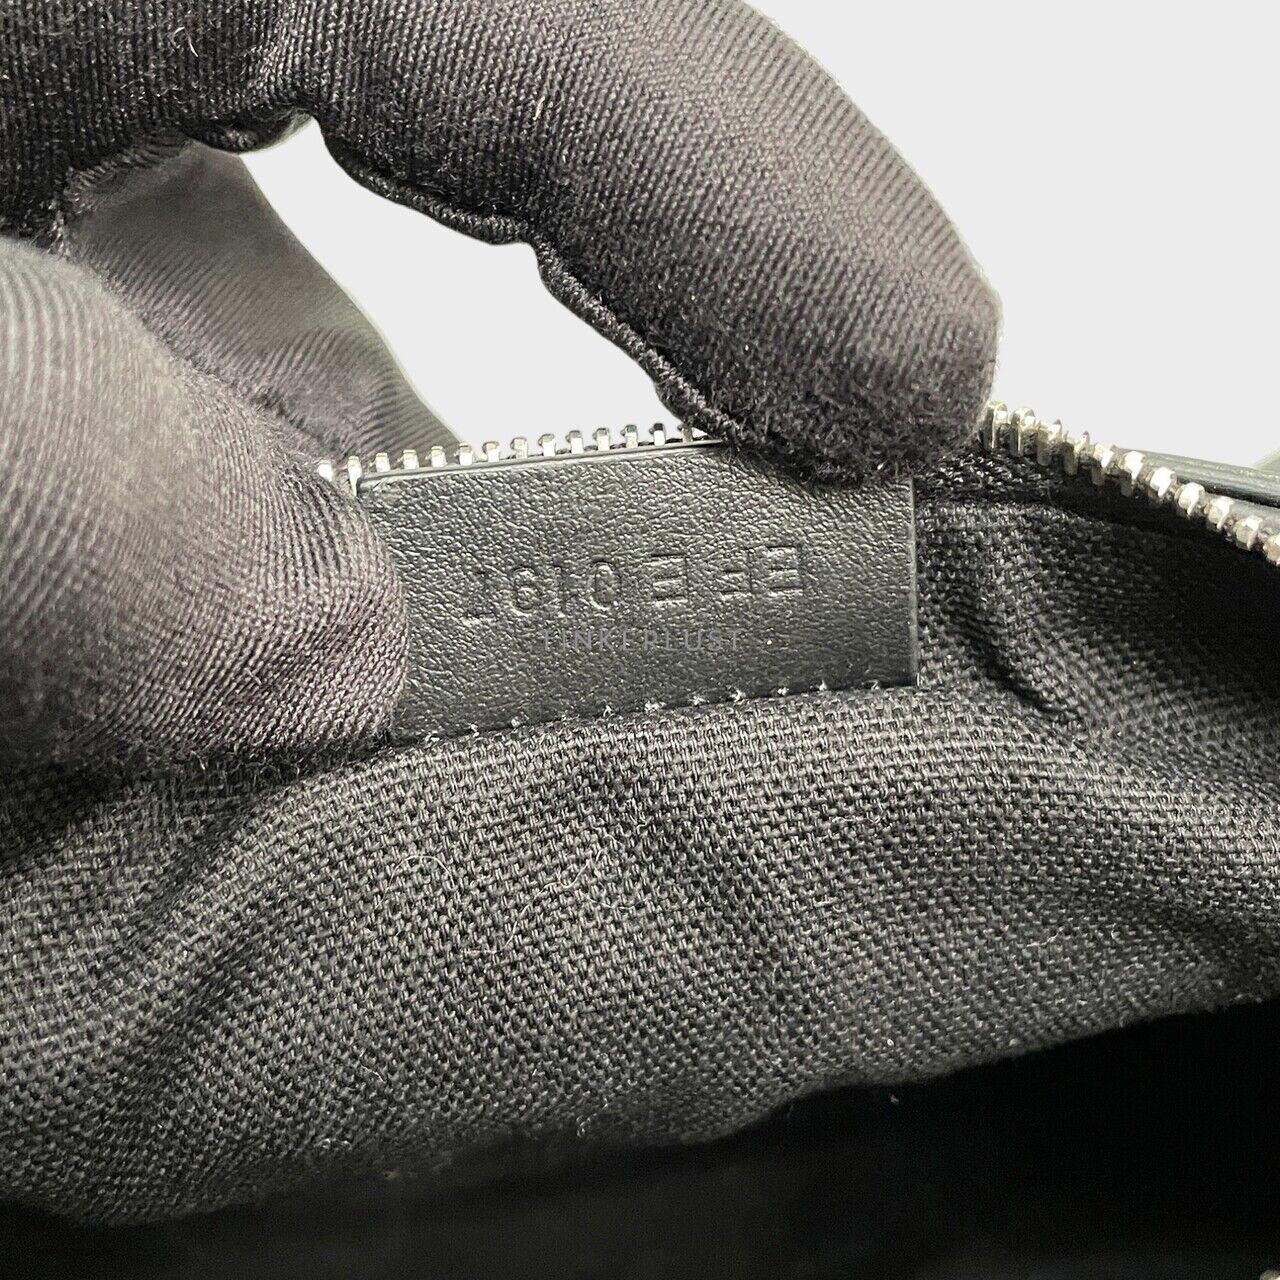 Givenchy Pandora Box Mini Chain Black Leather SHW Sling Bag